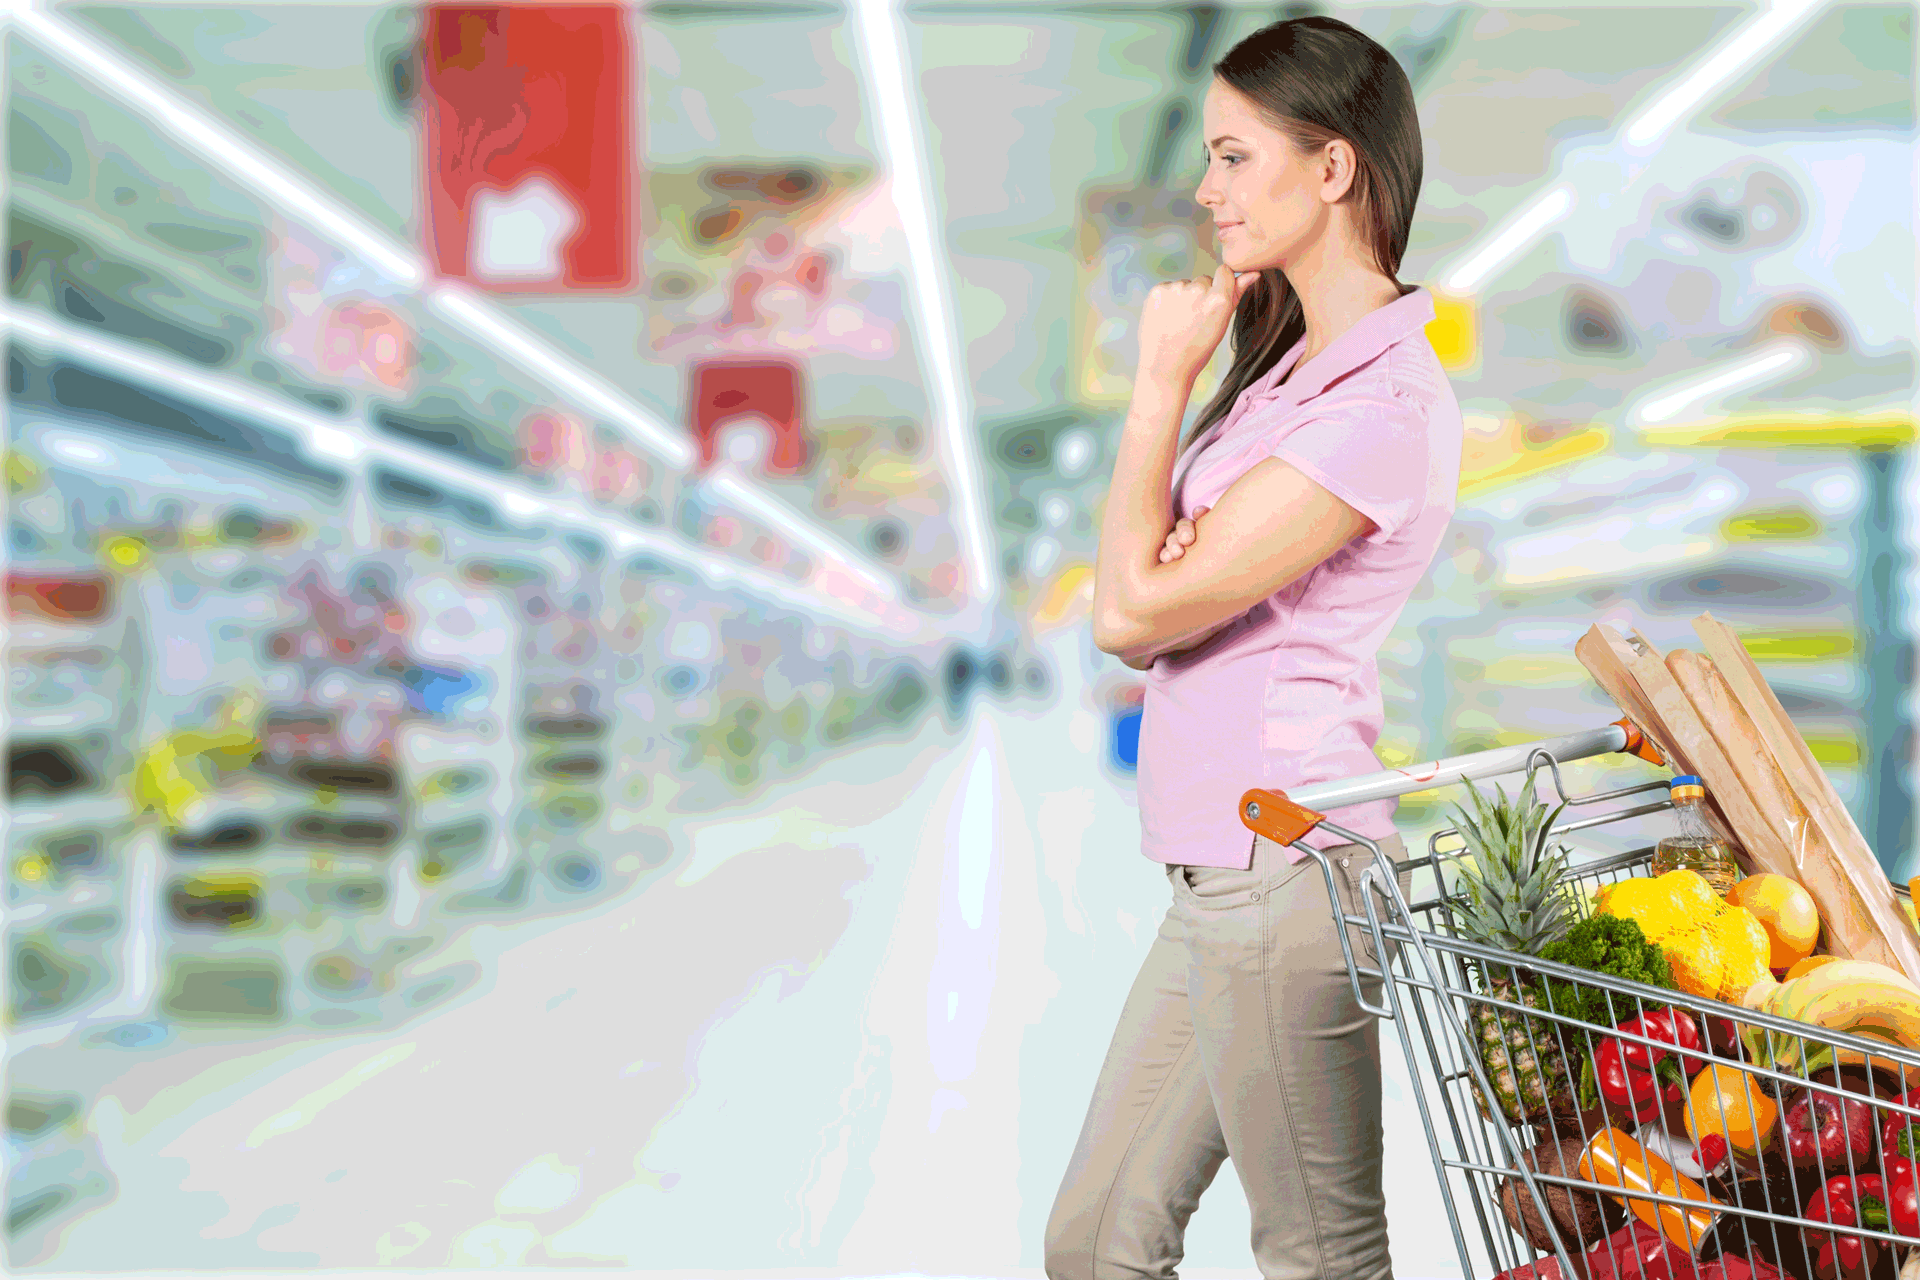 While market. Женщина с тележкой в супермаркете. Женщина с корзиной в супермаркете. Тележка для супермаркета. Тележка с продуктами женщина.